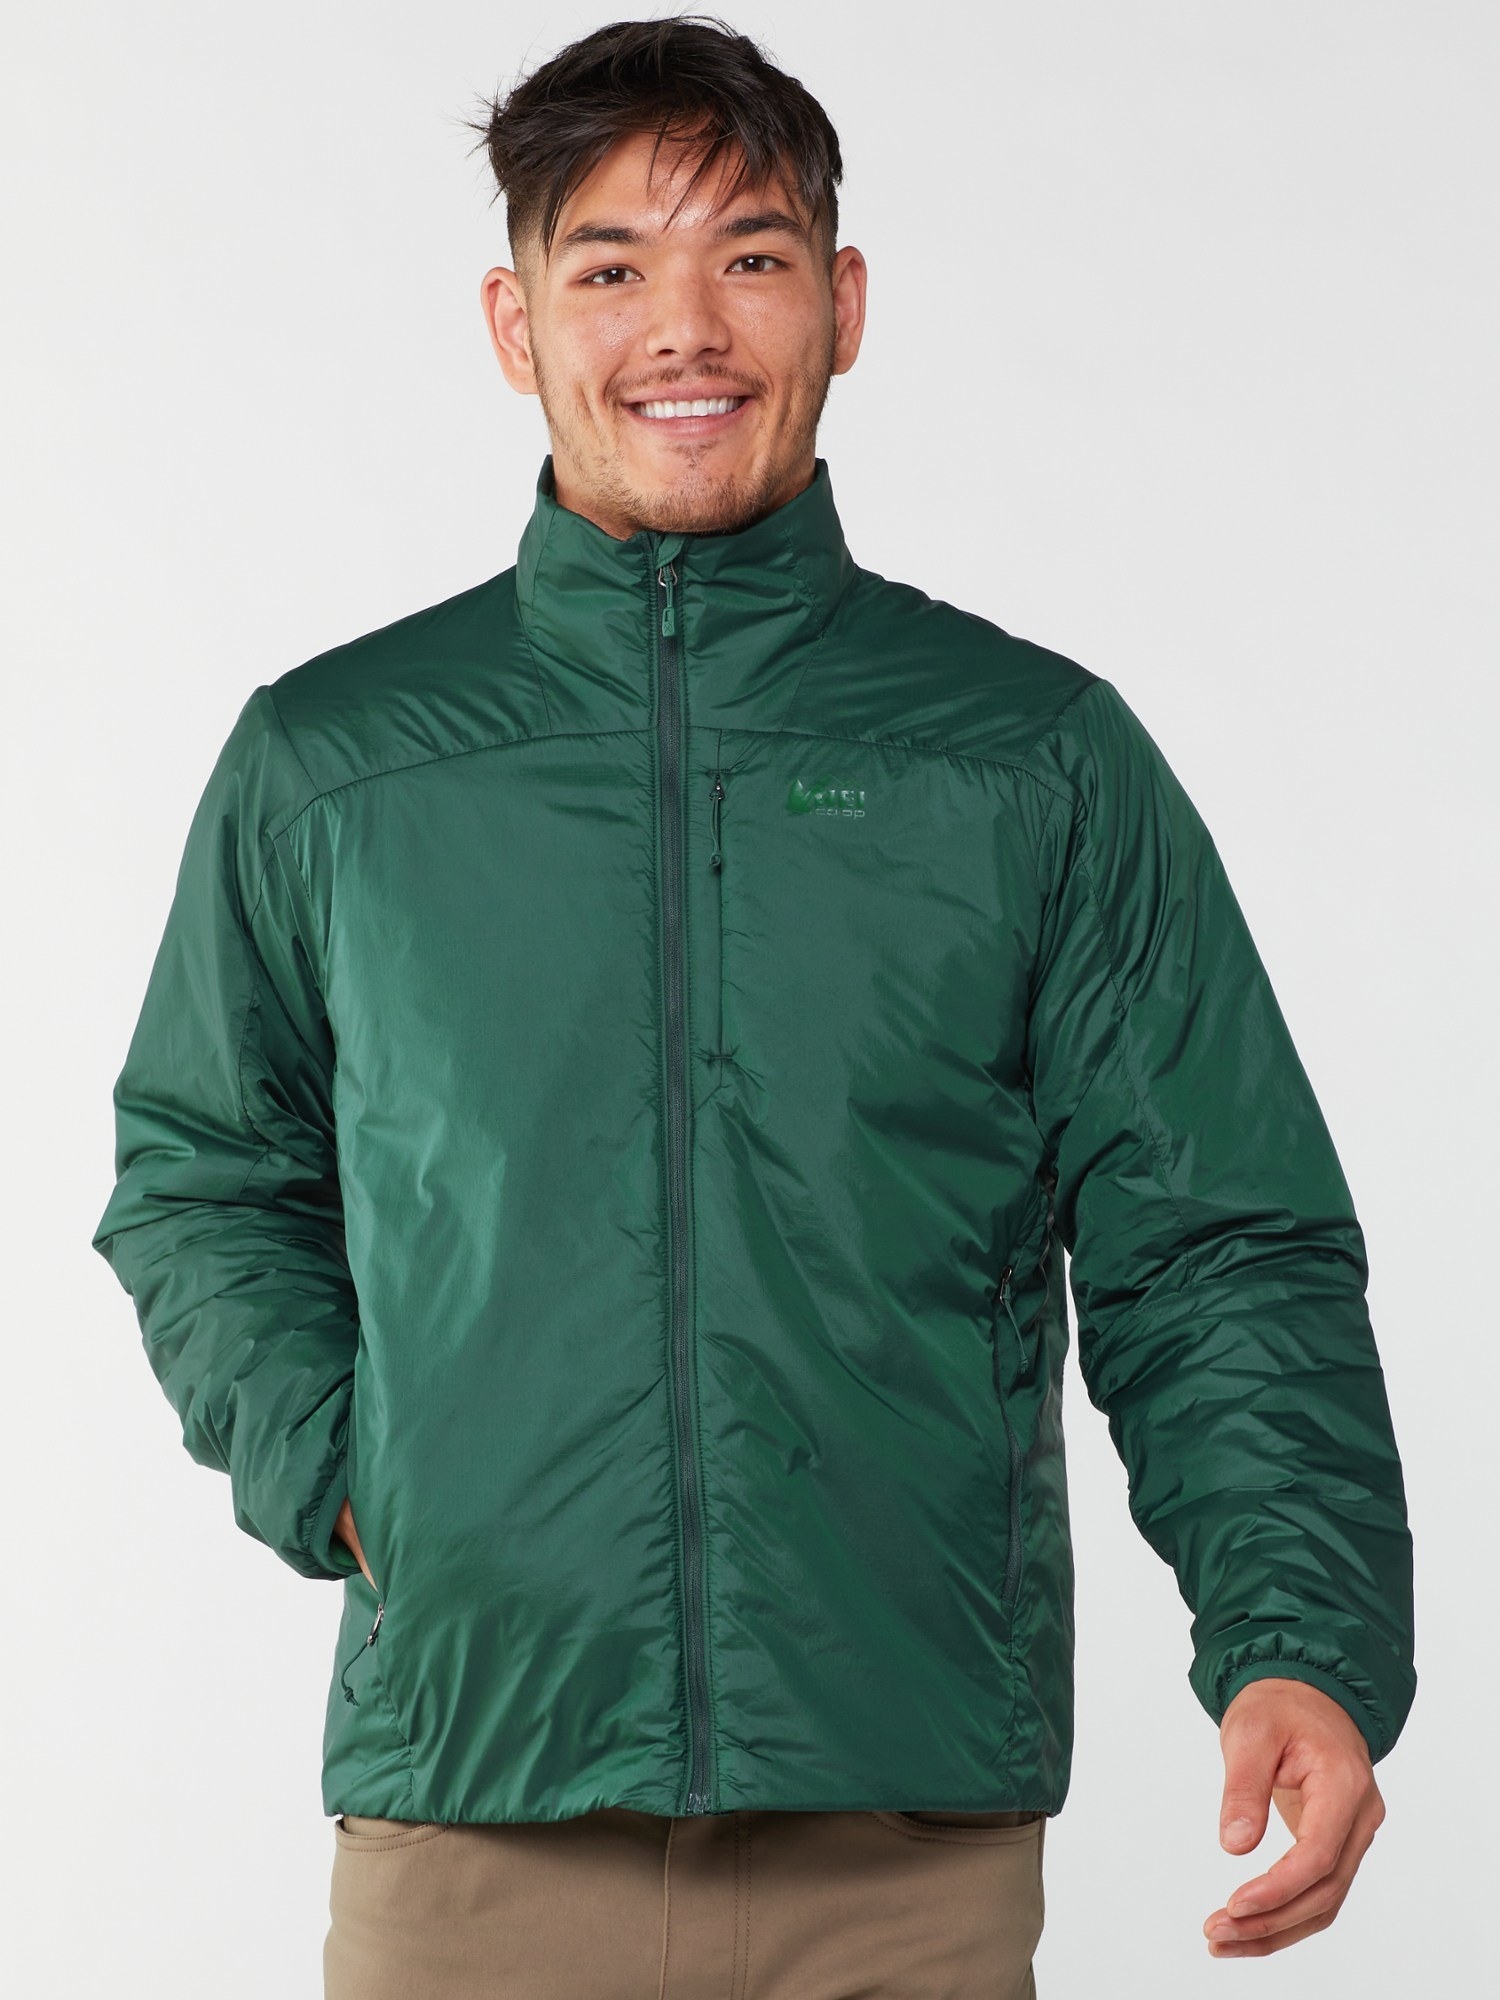 model in the green zip-up jacket